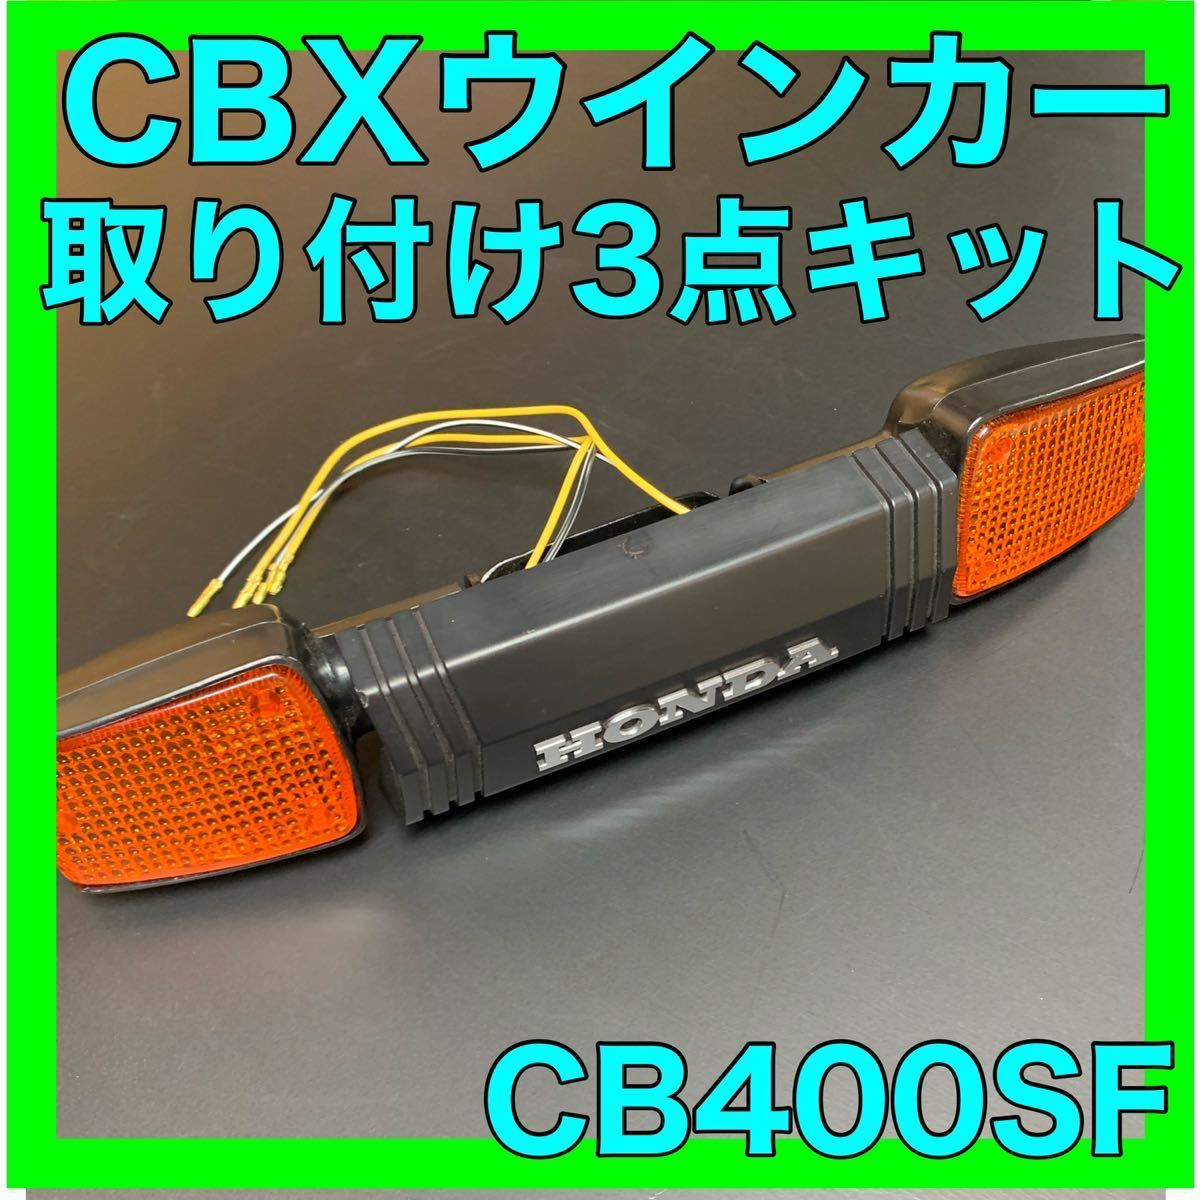 CB400T 配電盤 その他セット 走行8000km 実働 ネジ類 ホーク 一台バラし出品中 ウインカー 超極上 CB400N CB250T  CB250N 売り切り - www.assimay.com